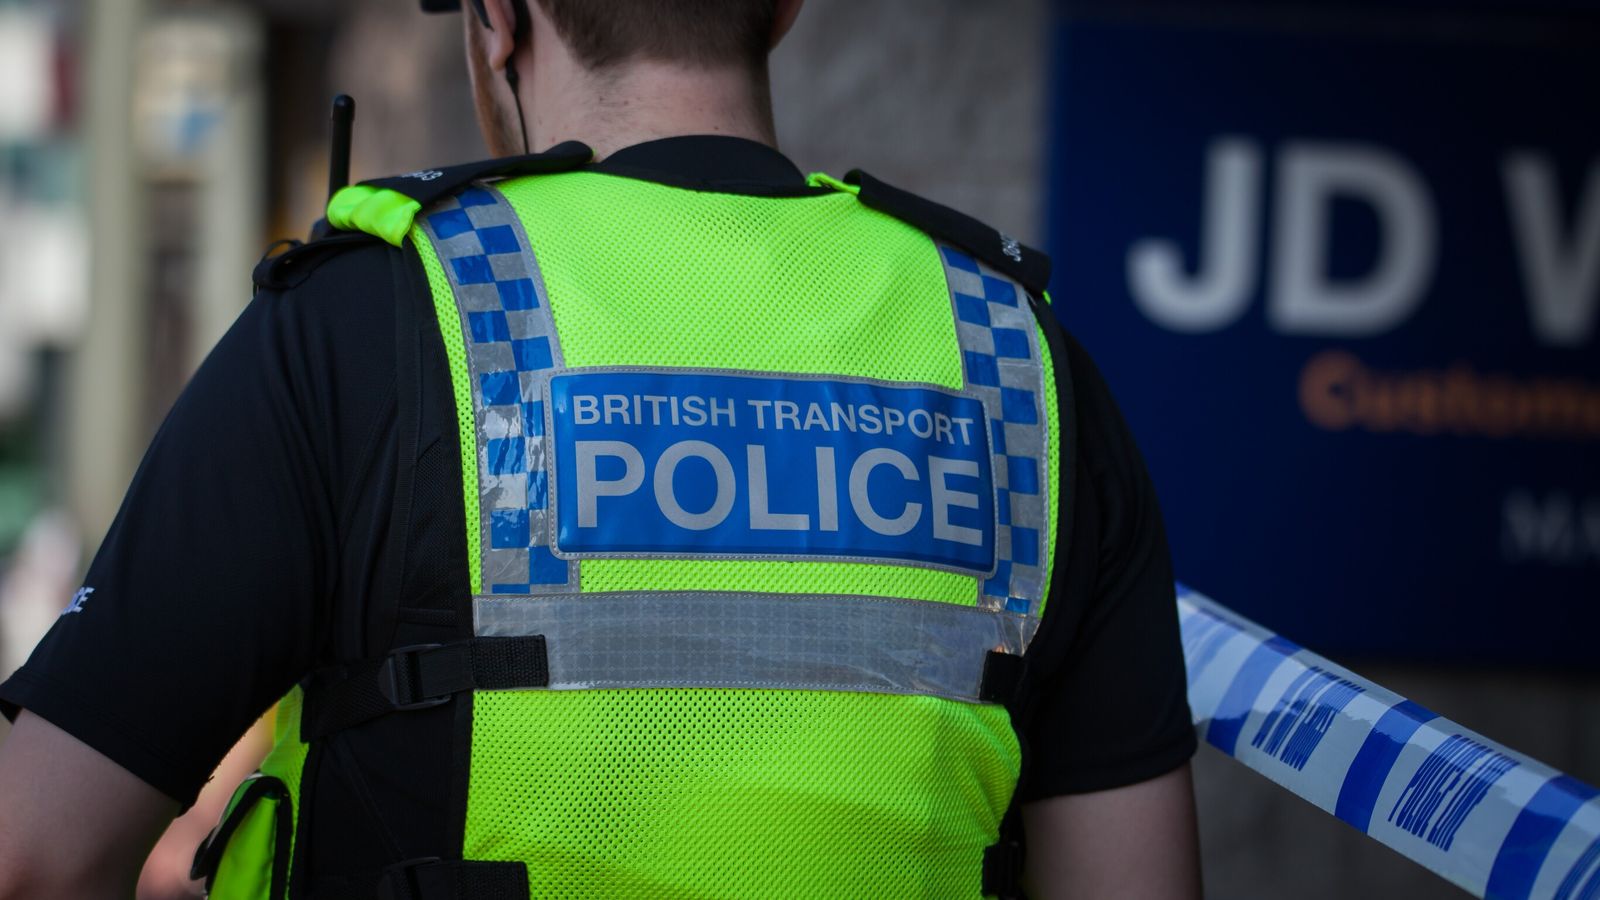 Man suffers 'life-threatening injuries' in stabbing on London train